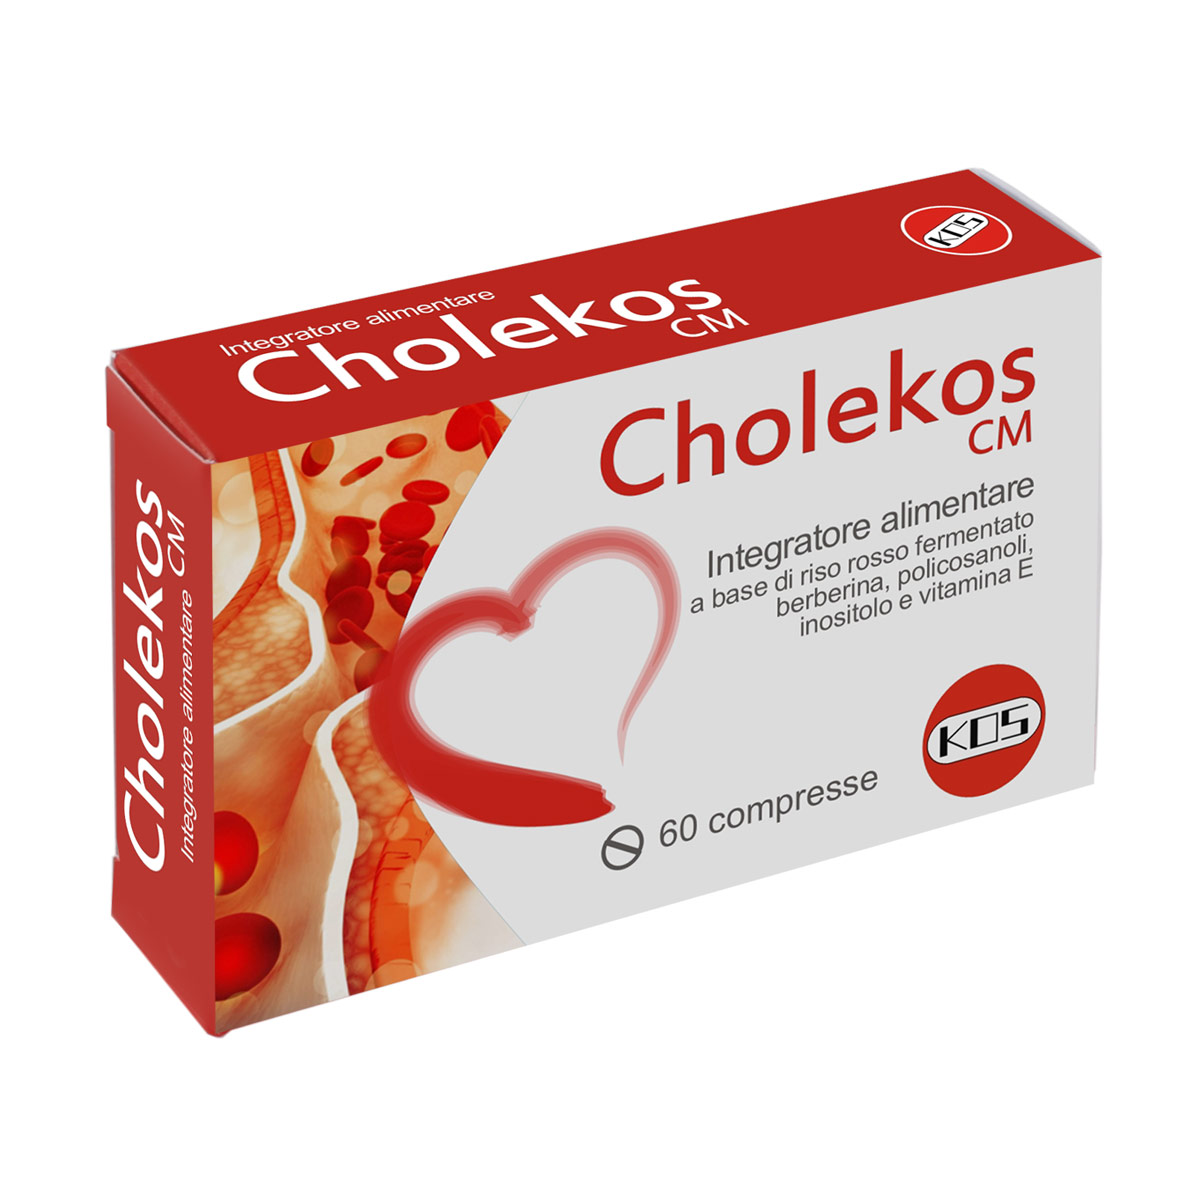 CholeKos CM 60 compresse